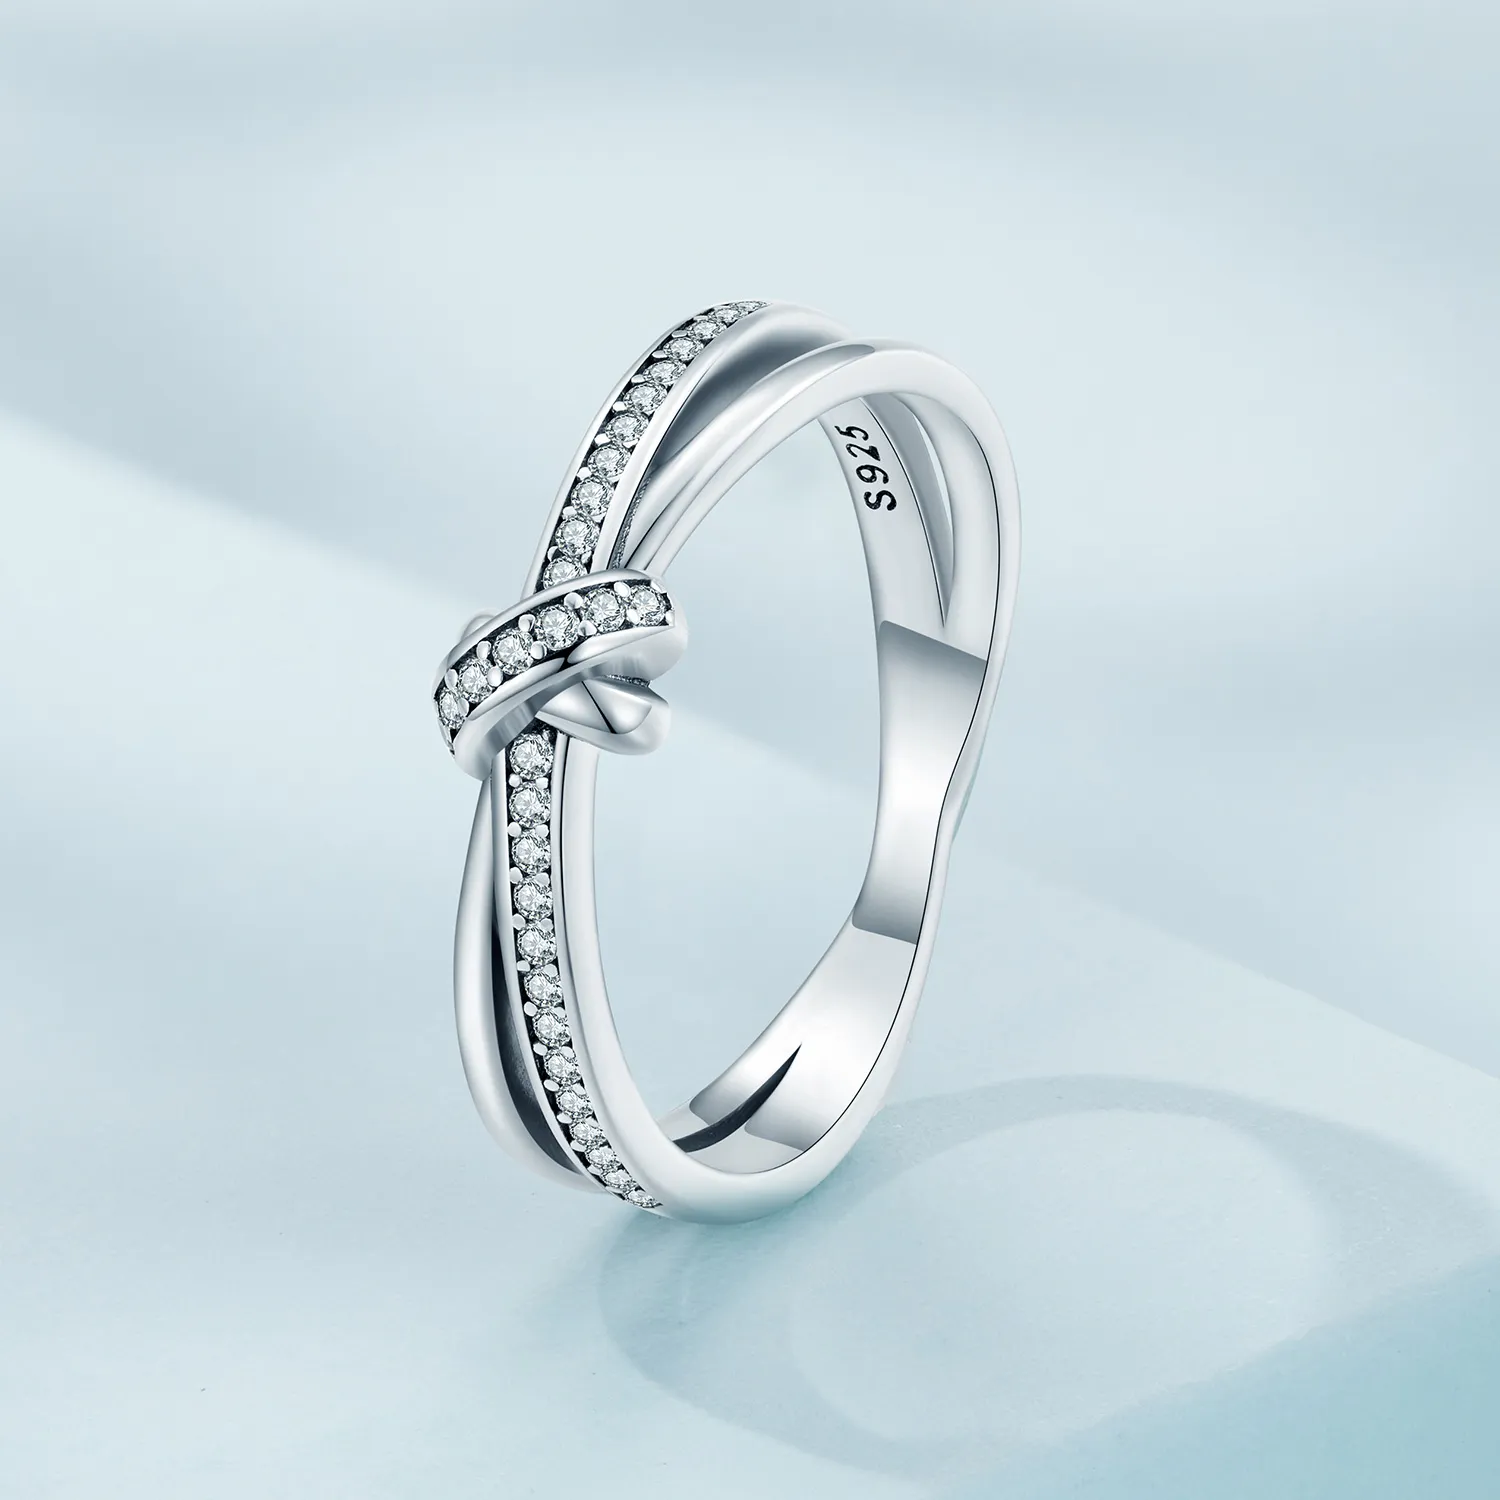 Pandora Style Knot Ring - SCR896